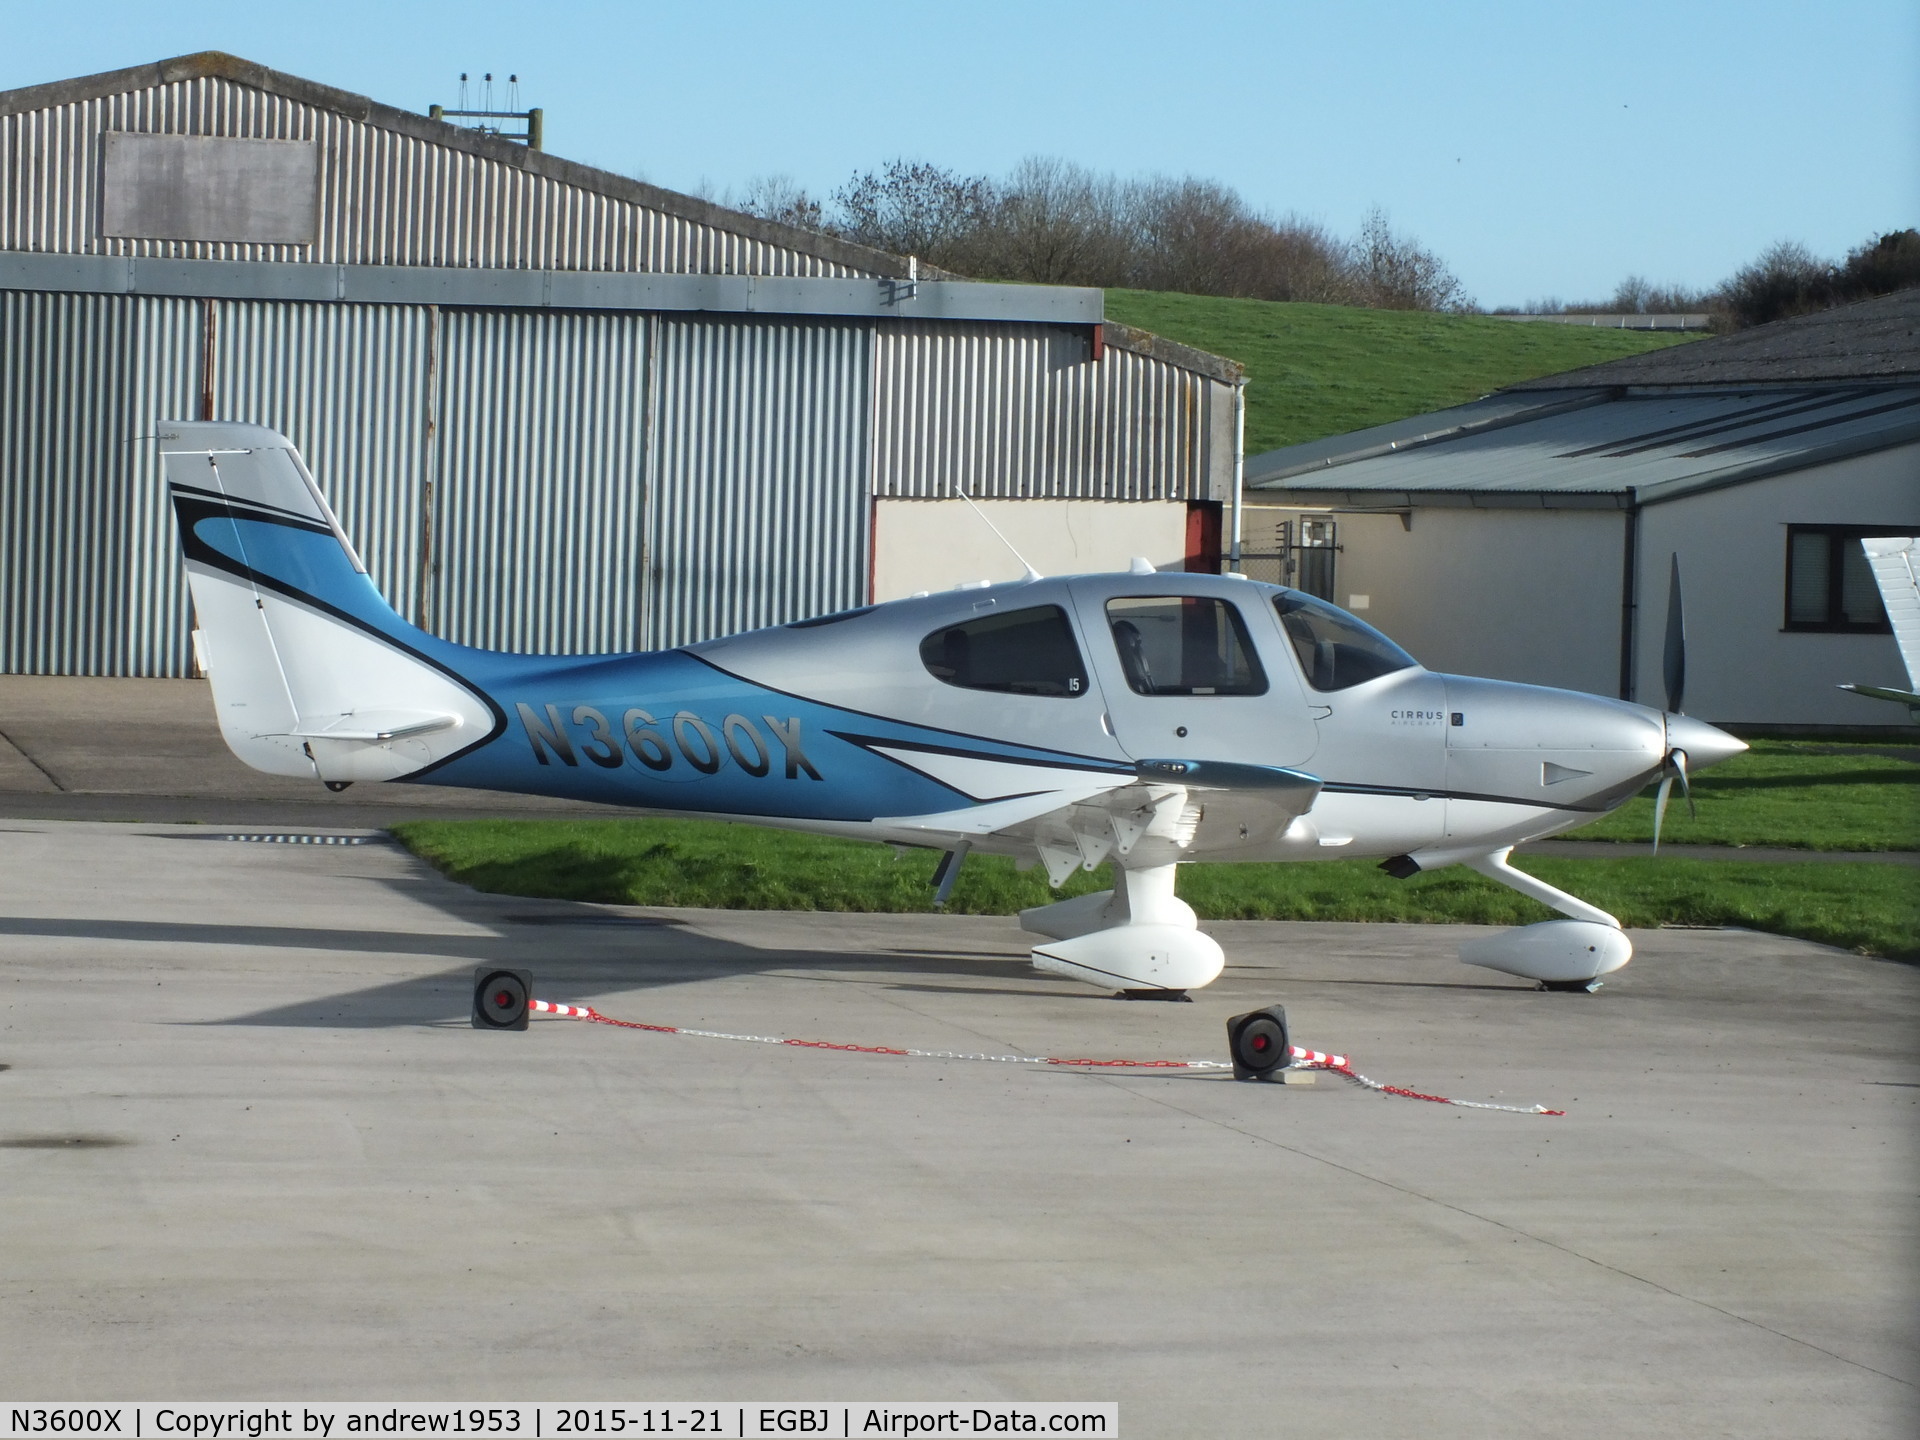 N3600X, 2013 Cirrus SR22T C/N 0491, N3600X at Gloucestershire Airport.